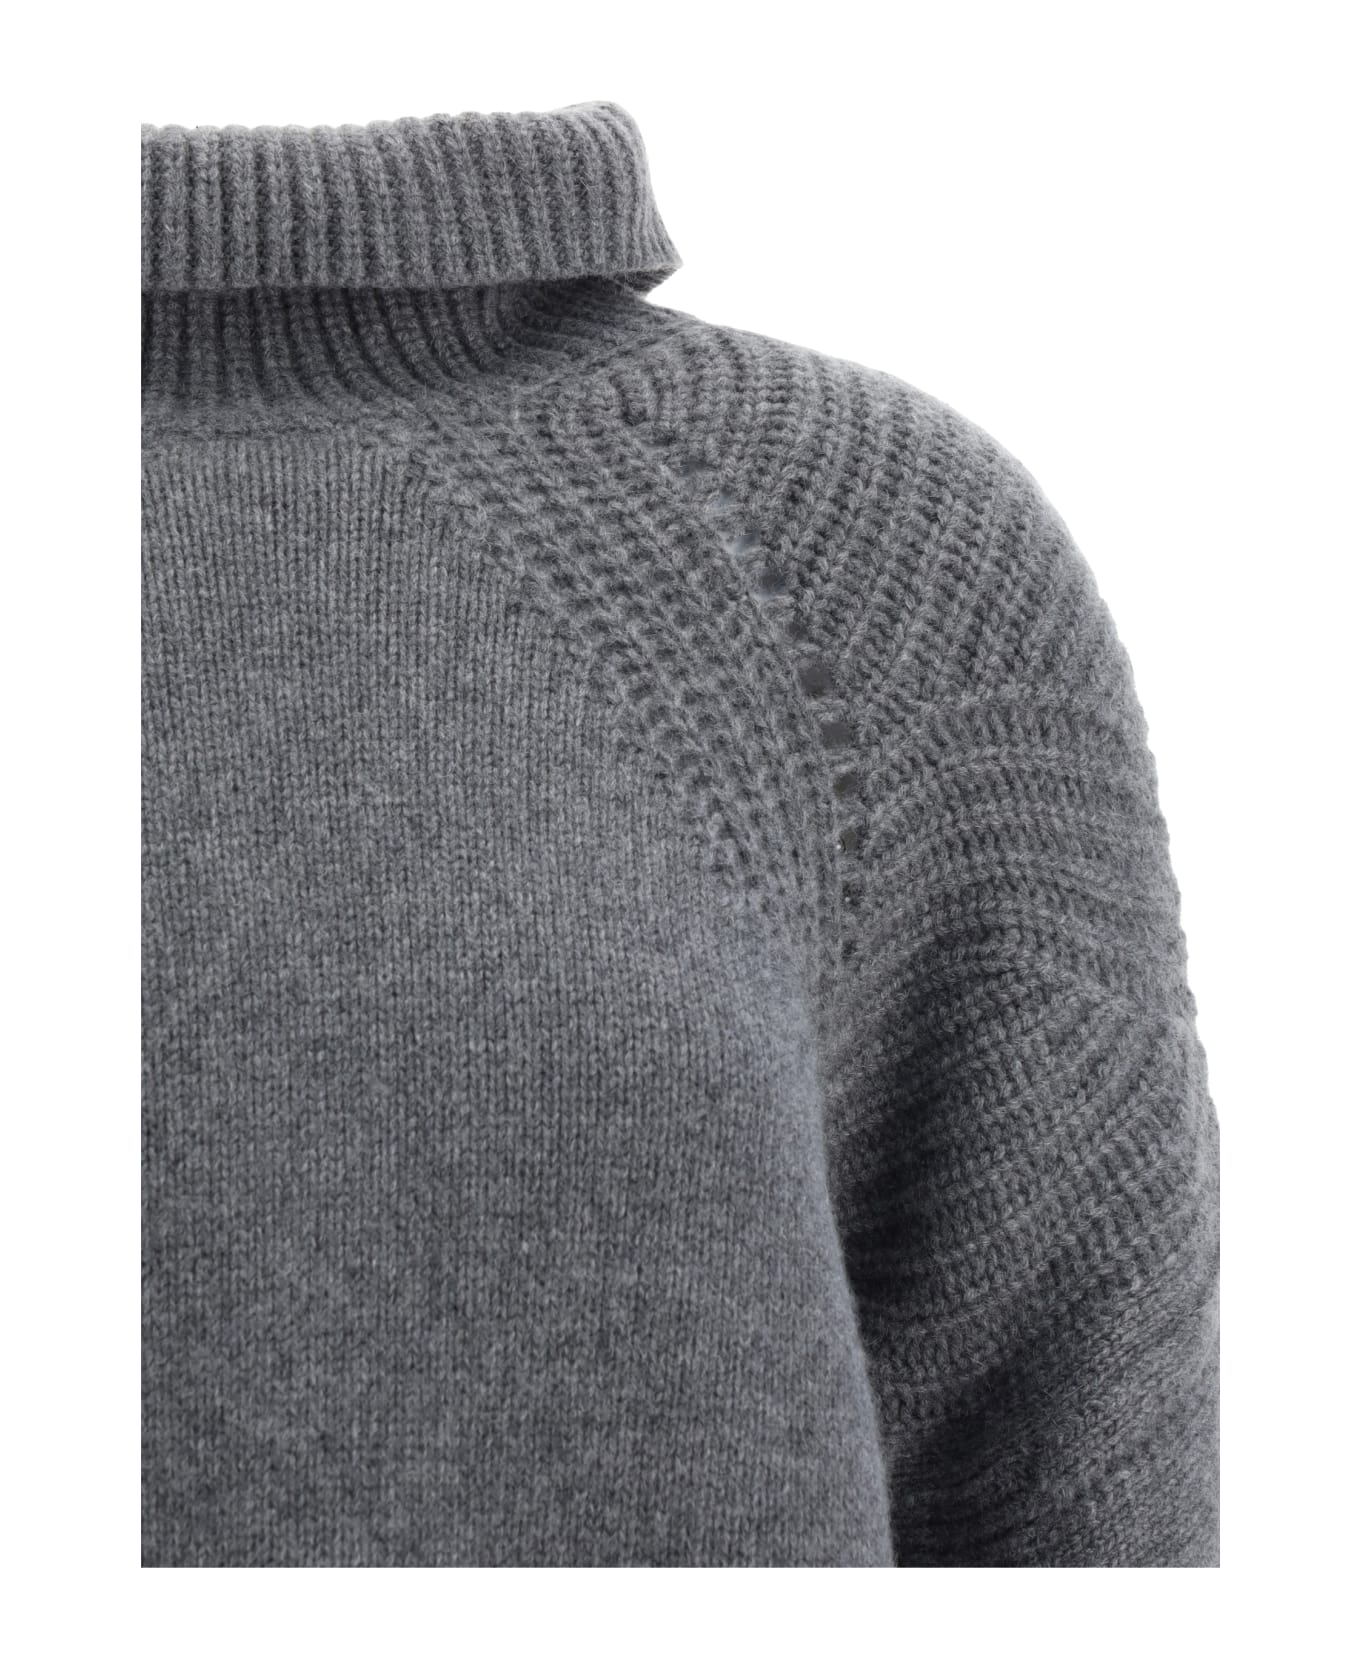 Ermanno Scervino Turtleneck Sweater Sweater - ANTRACITE ニットウェア